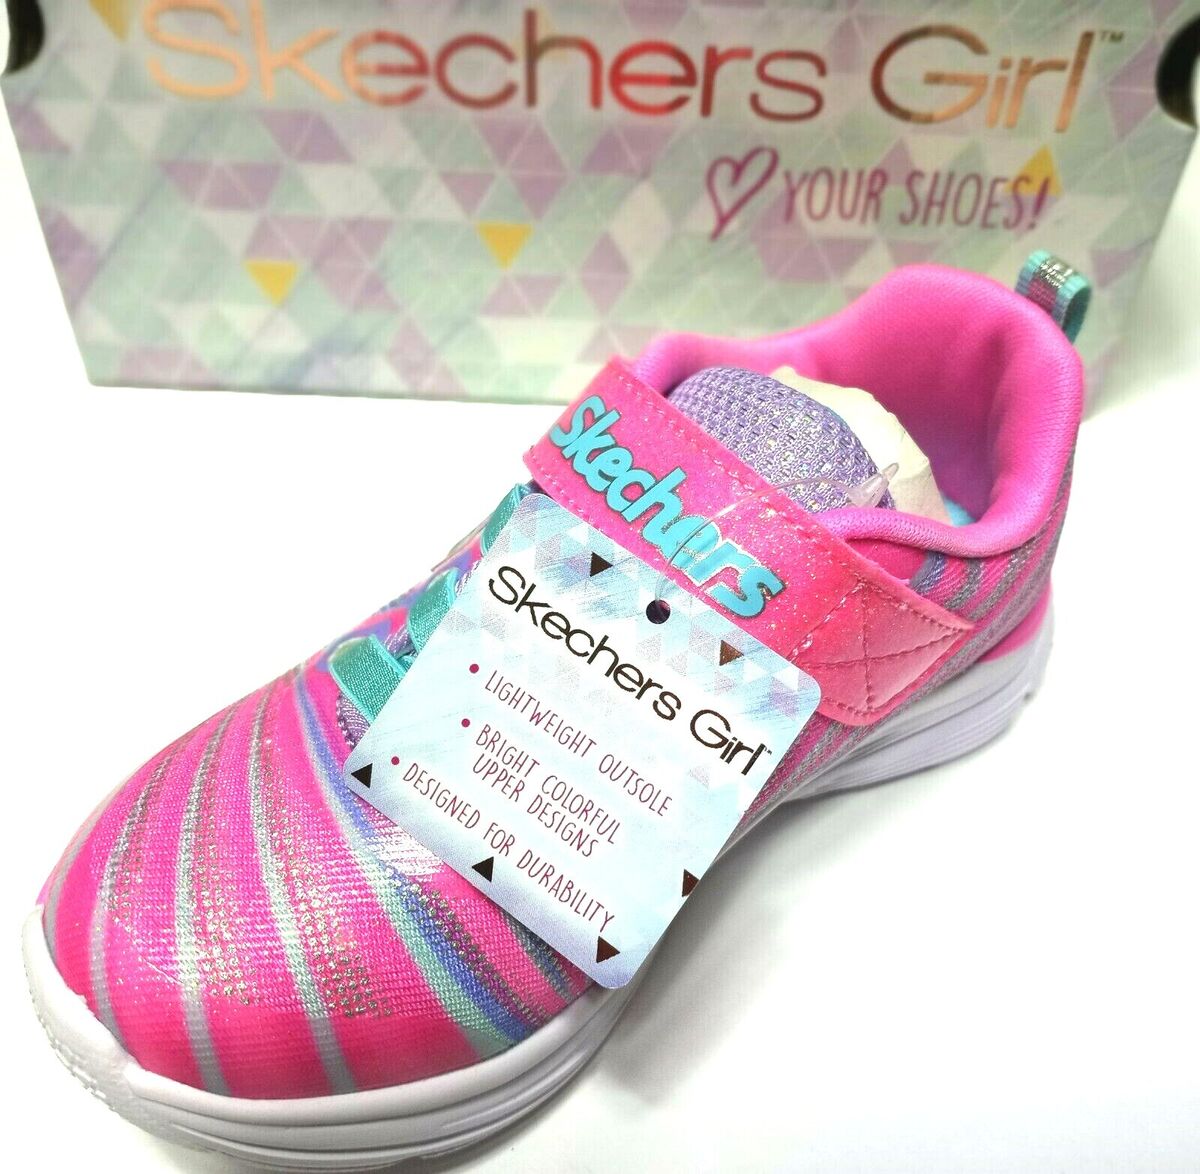 Skechers Lites Sweet Sprinter Shoes Pink Multi eBay